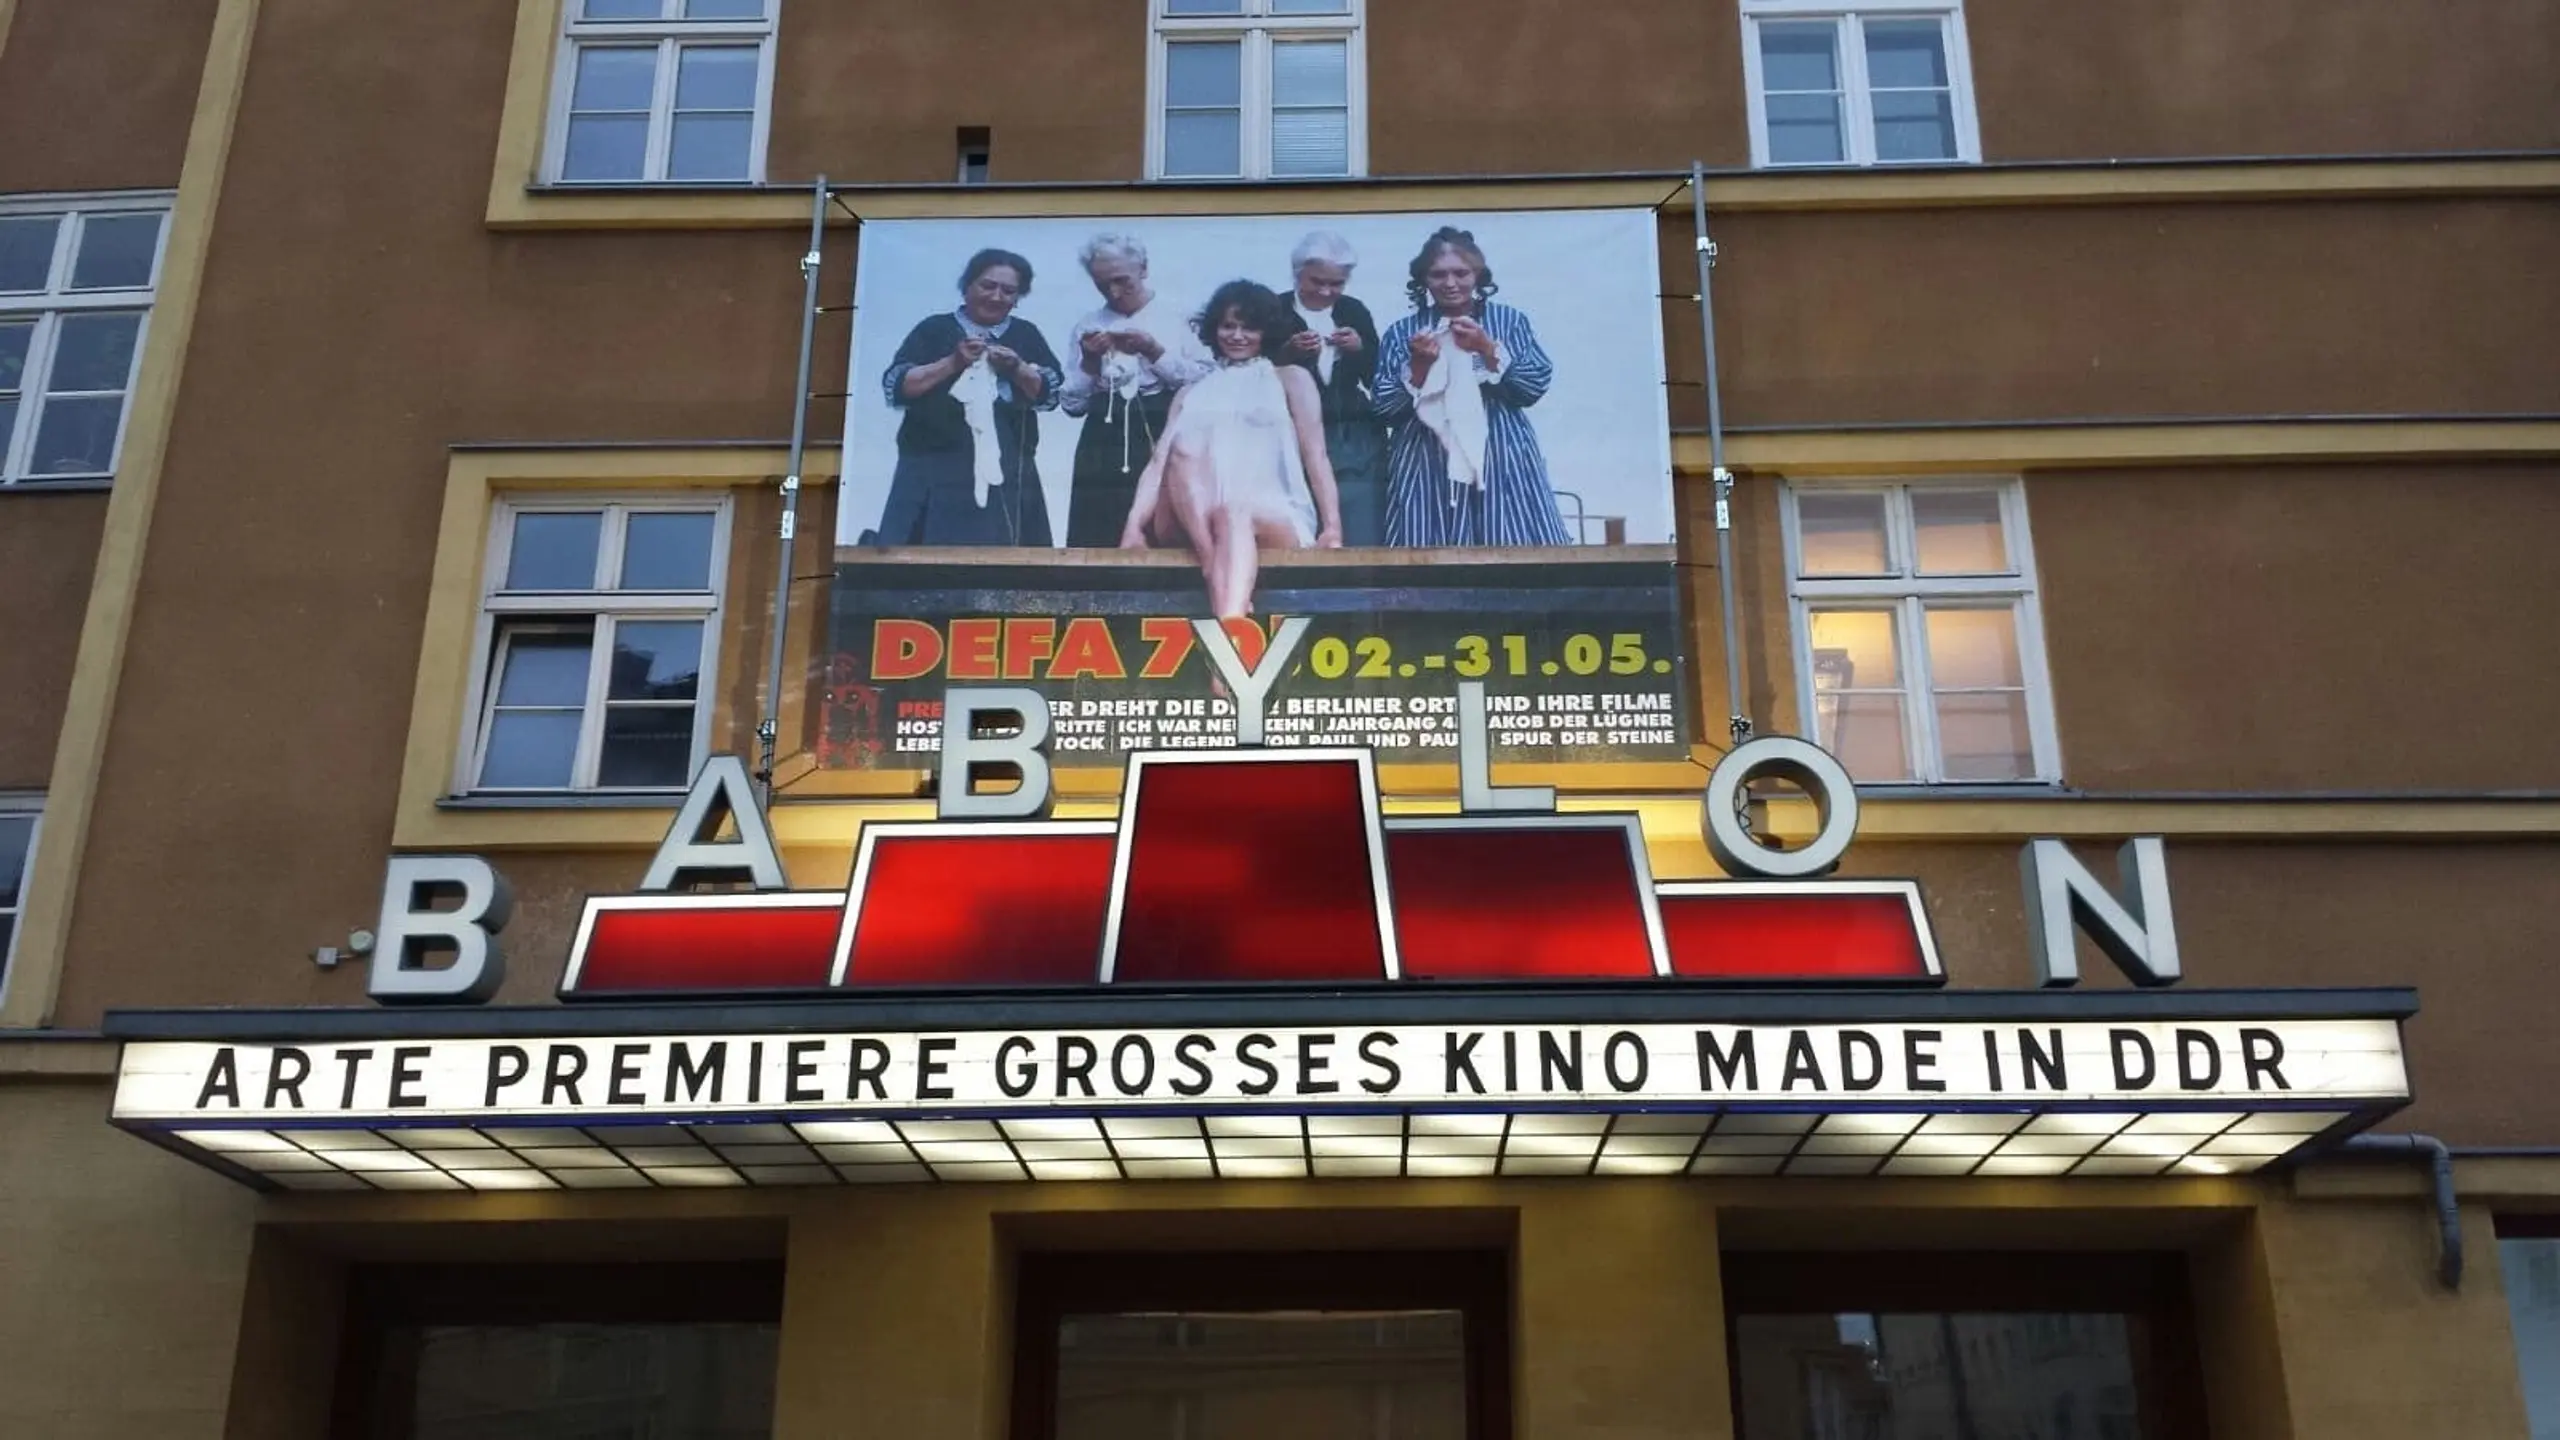 Großes Kino made in DDR